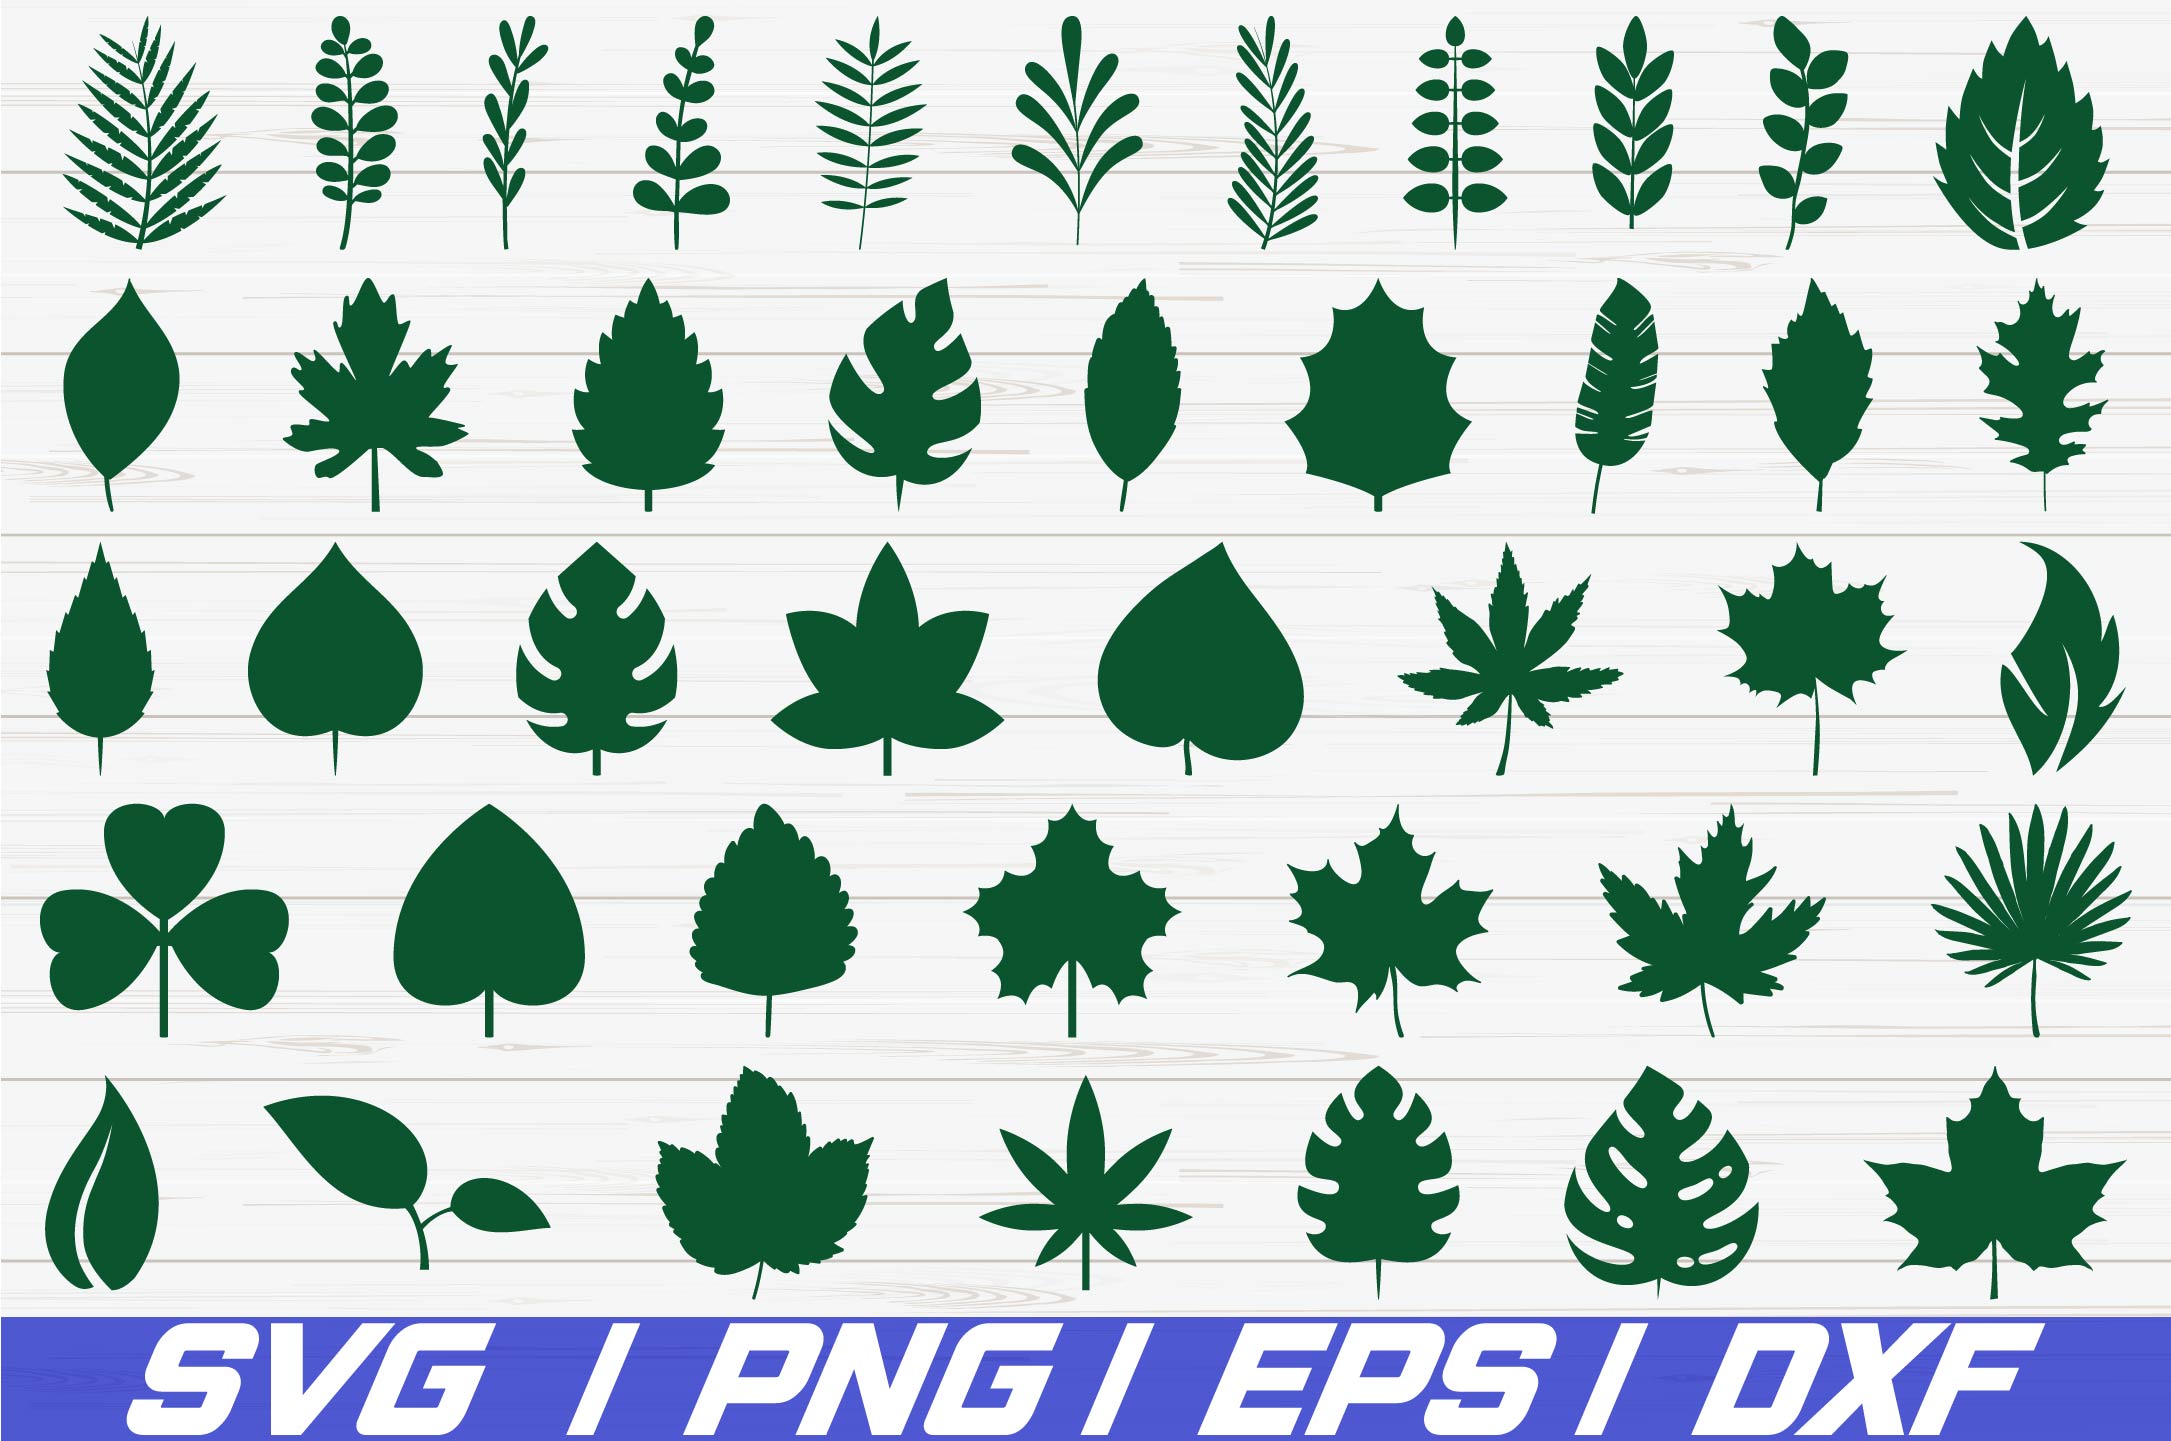 Download 42 Paper Leaves / SVG / Cut File / Leaf Templates / Cricut